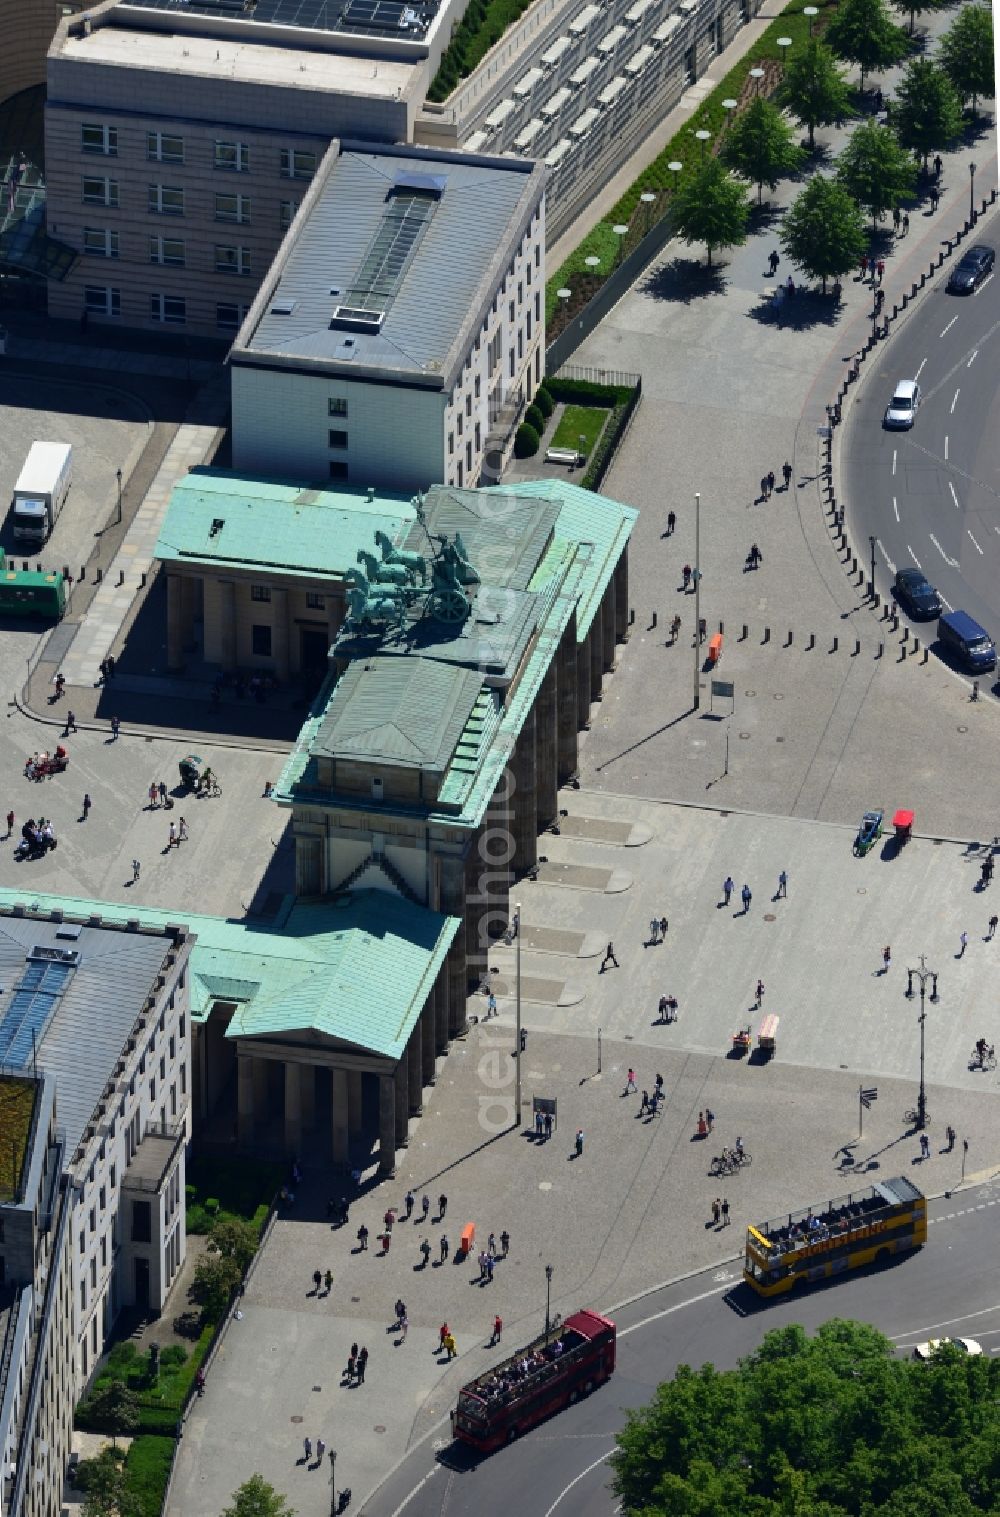 Berlin from the bird's eye view: View of the Brandenburg Gate at the Pariser Platz in Berlin